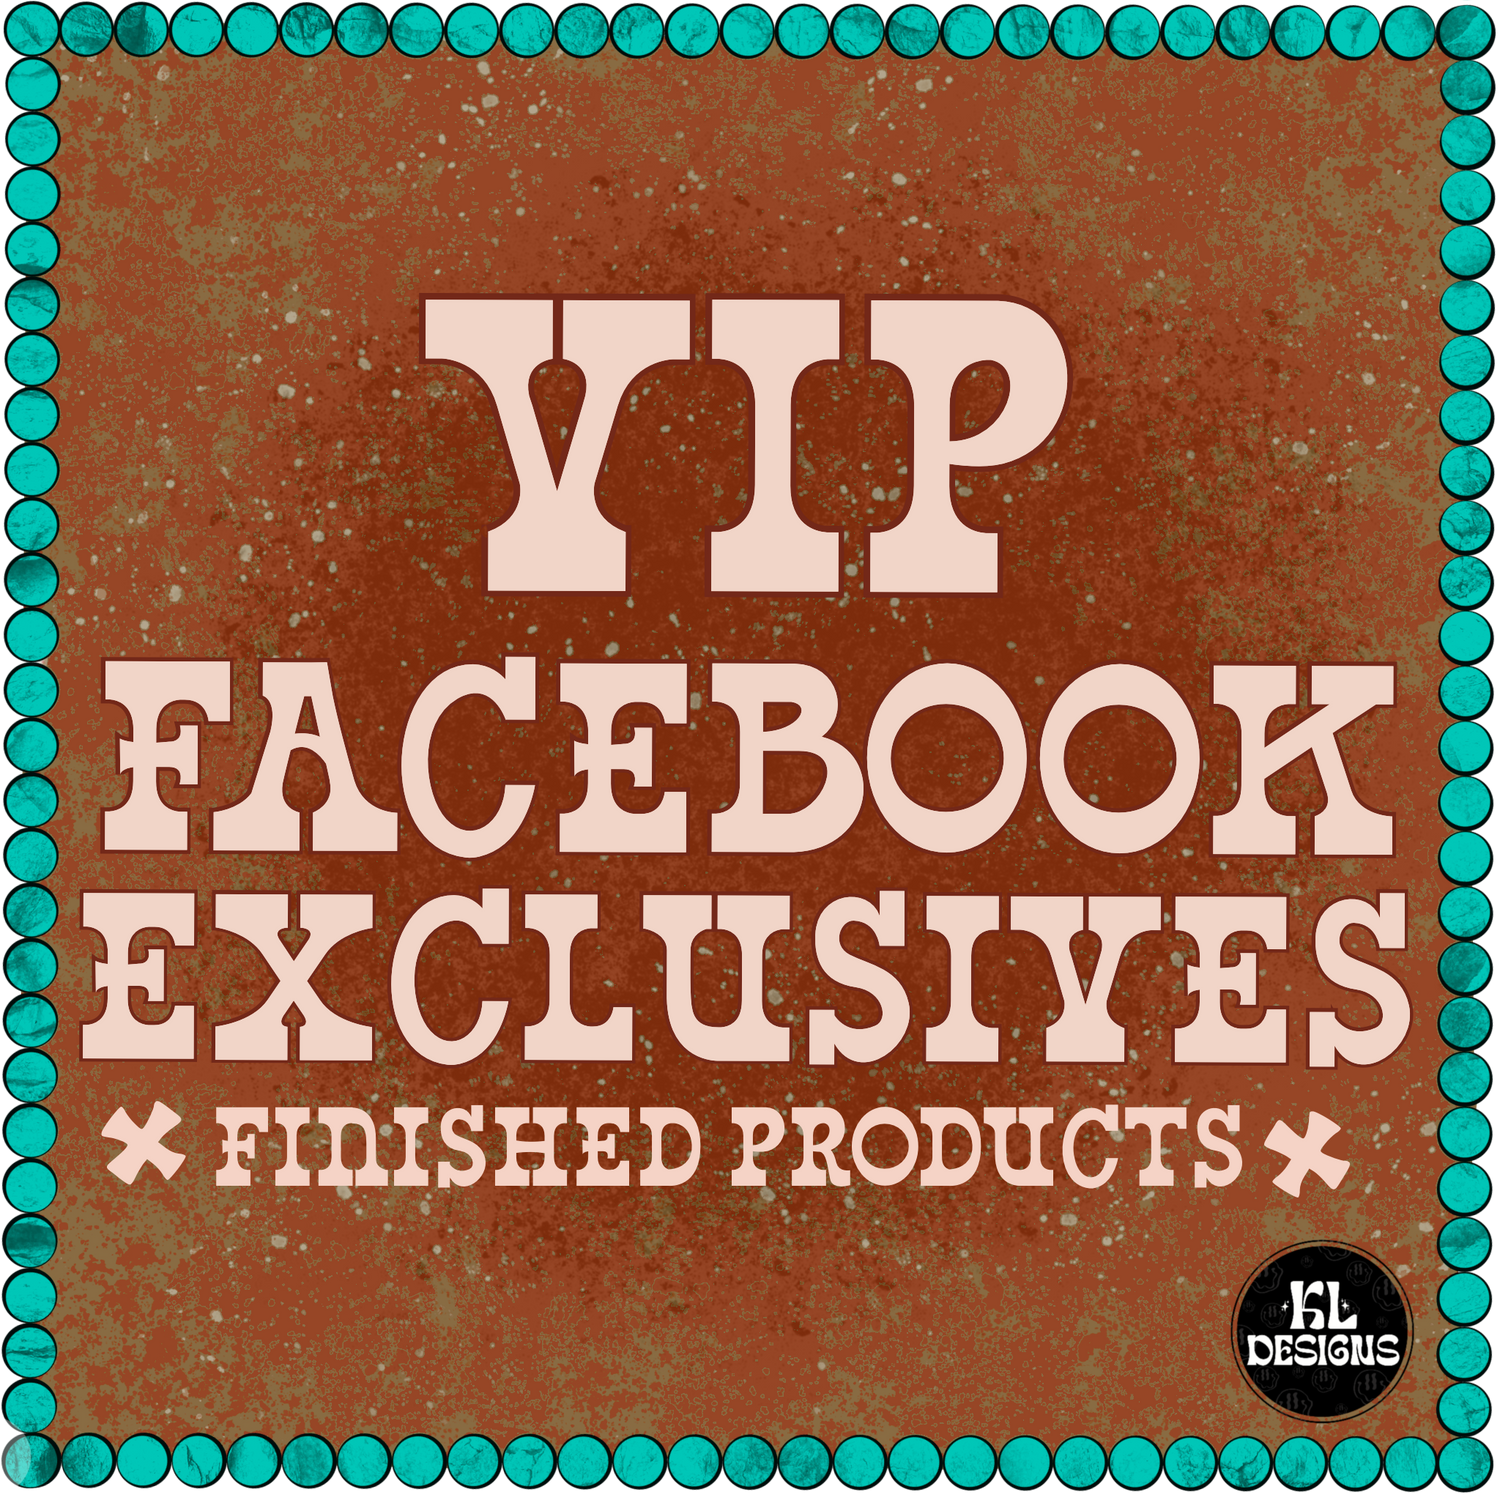 VIP Facebook Exclusives